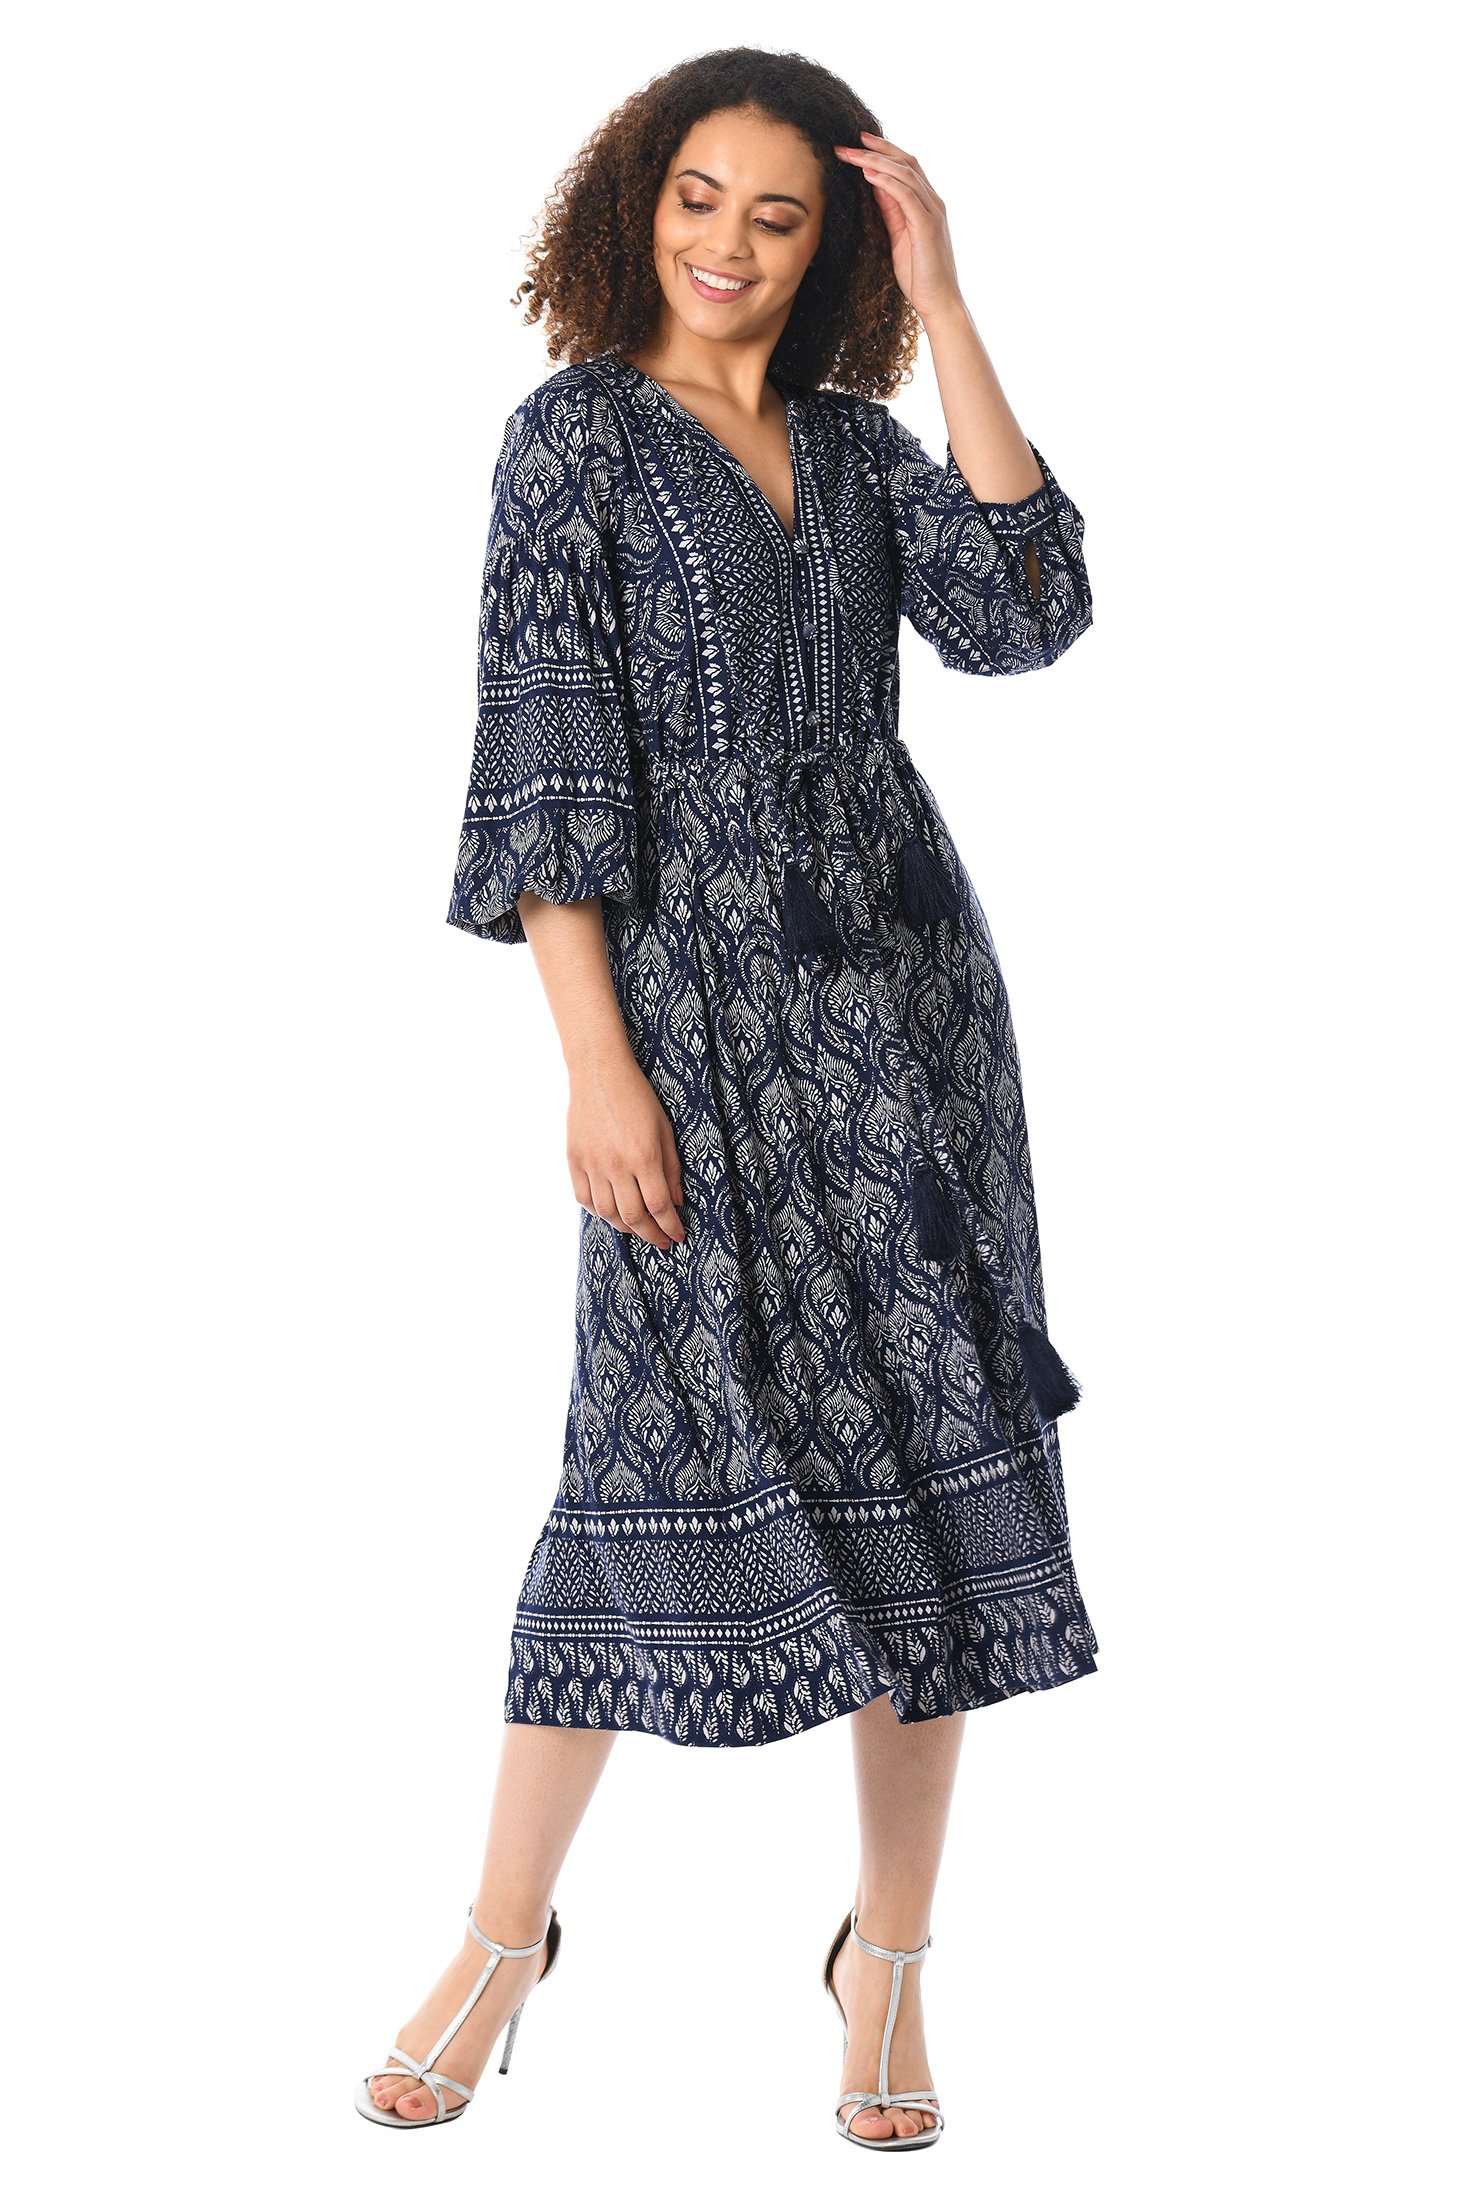 Shop Tile print ruched sleeve cotton knit dress | eShakti